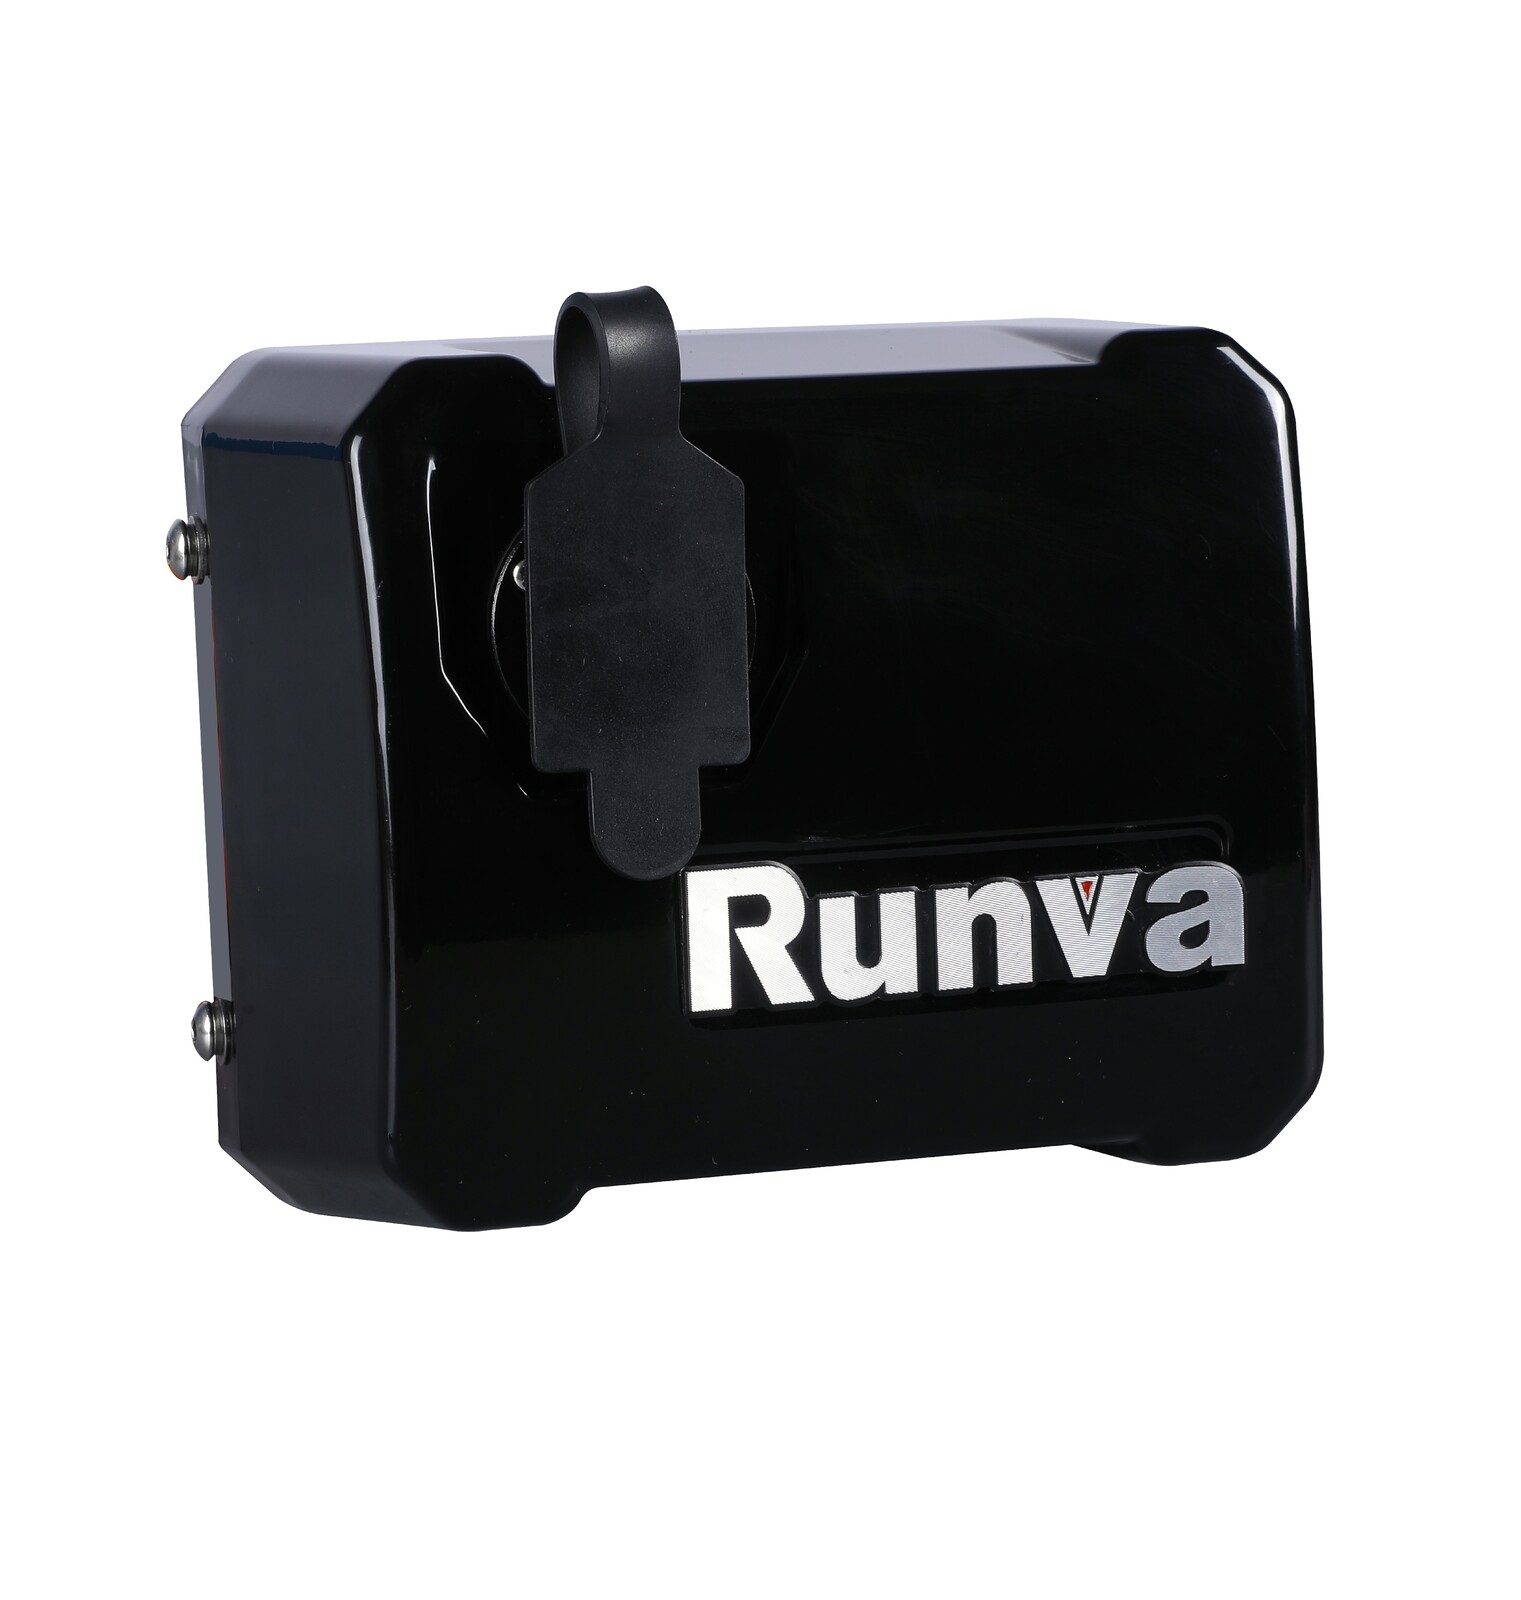 Runva Control Box Replacement Cover - BLACK (Fits Premium Models)